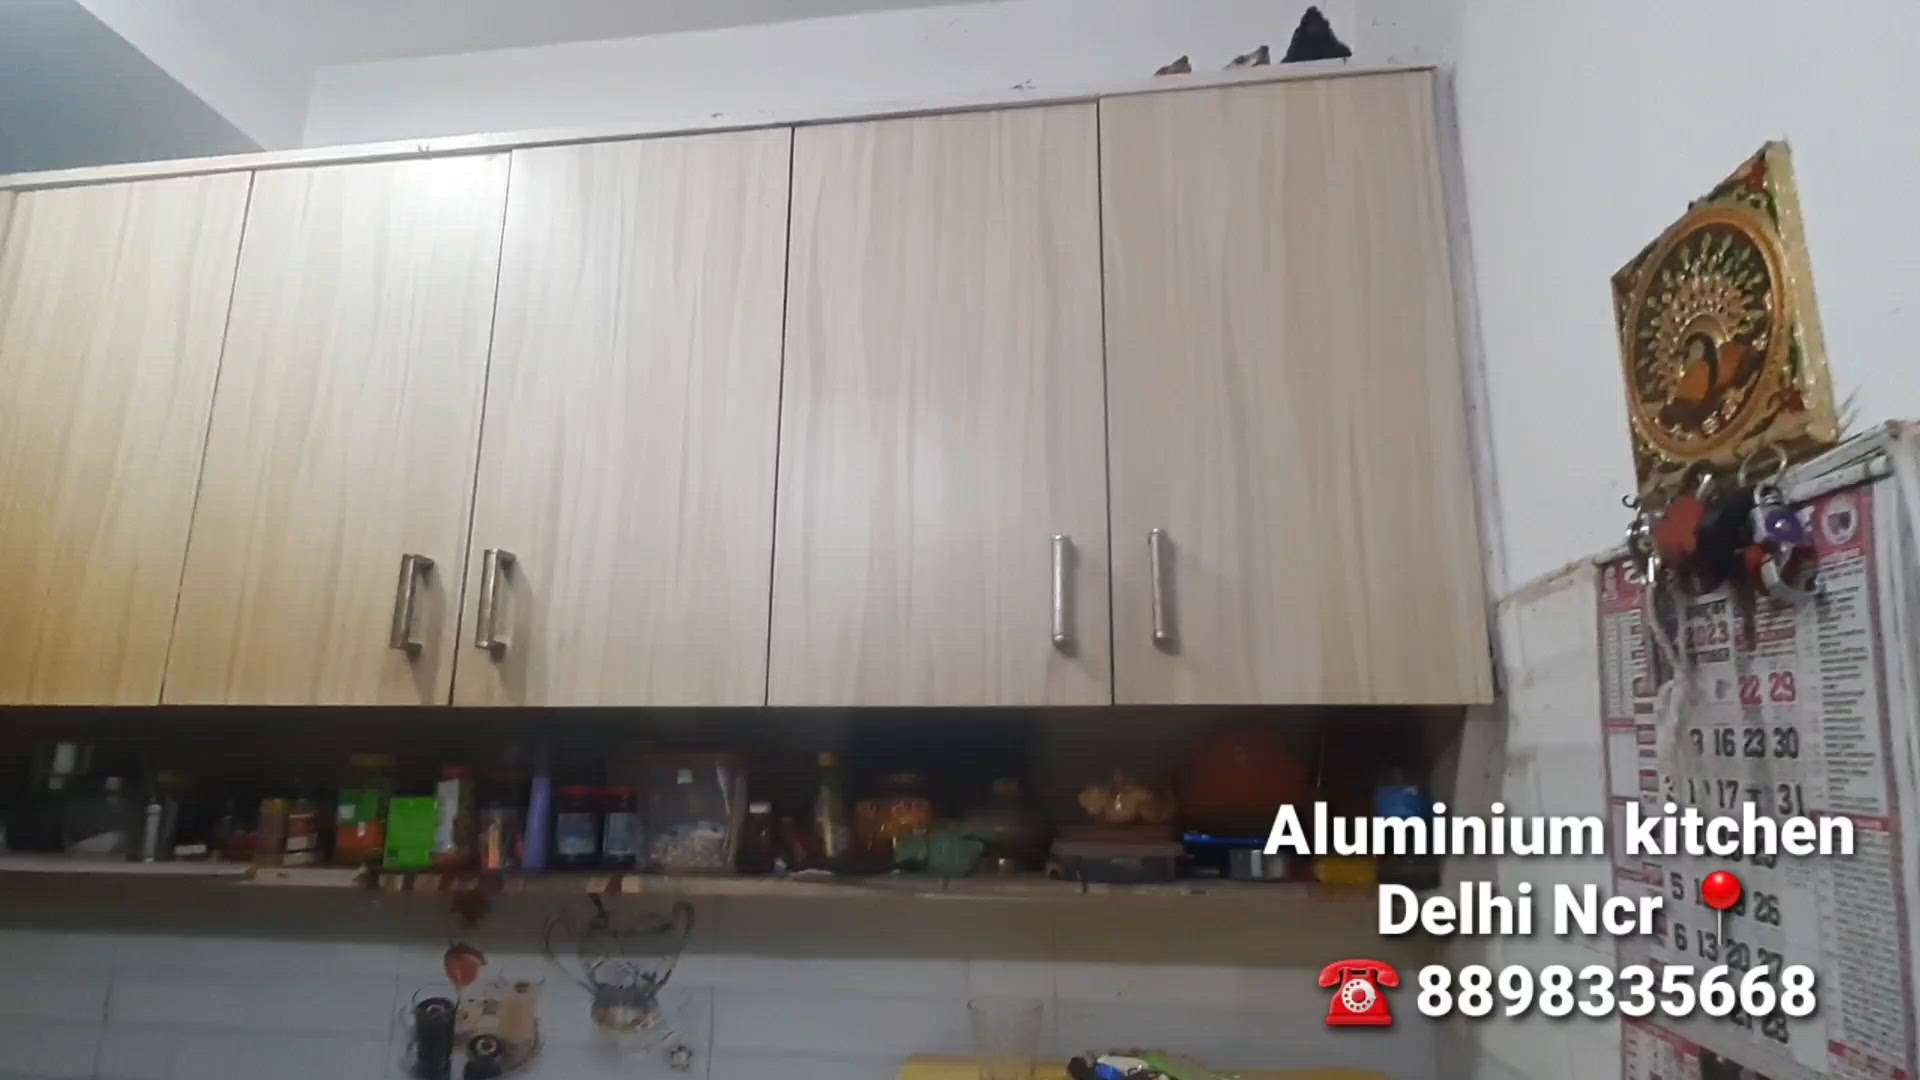 Aluminium kitchen cabinets 
☎️#8898335668 Delhi Ncr 📍

#aluminiumkitchen #aluminiumkitchendesigner #Anti-Termite #termitetreatment #InteriorDesigner #ClosedKitchen #invisiblegrill